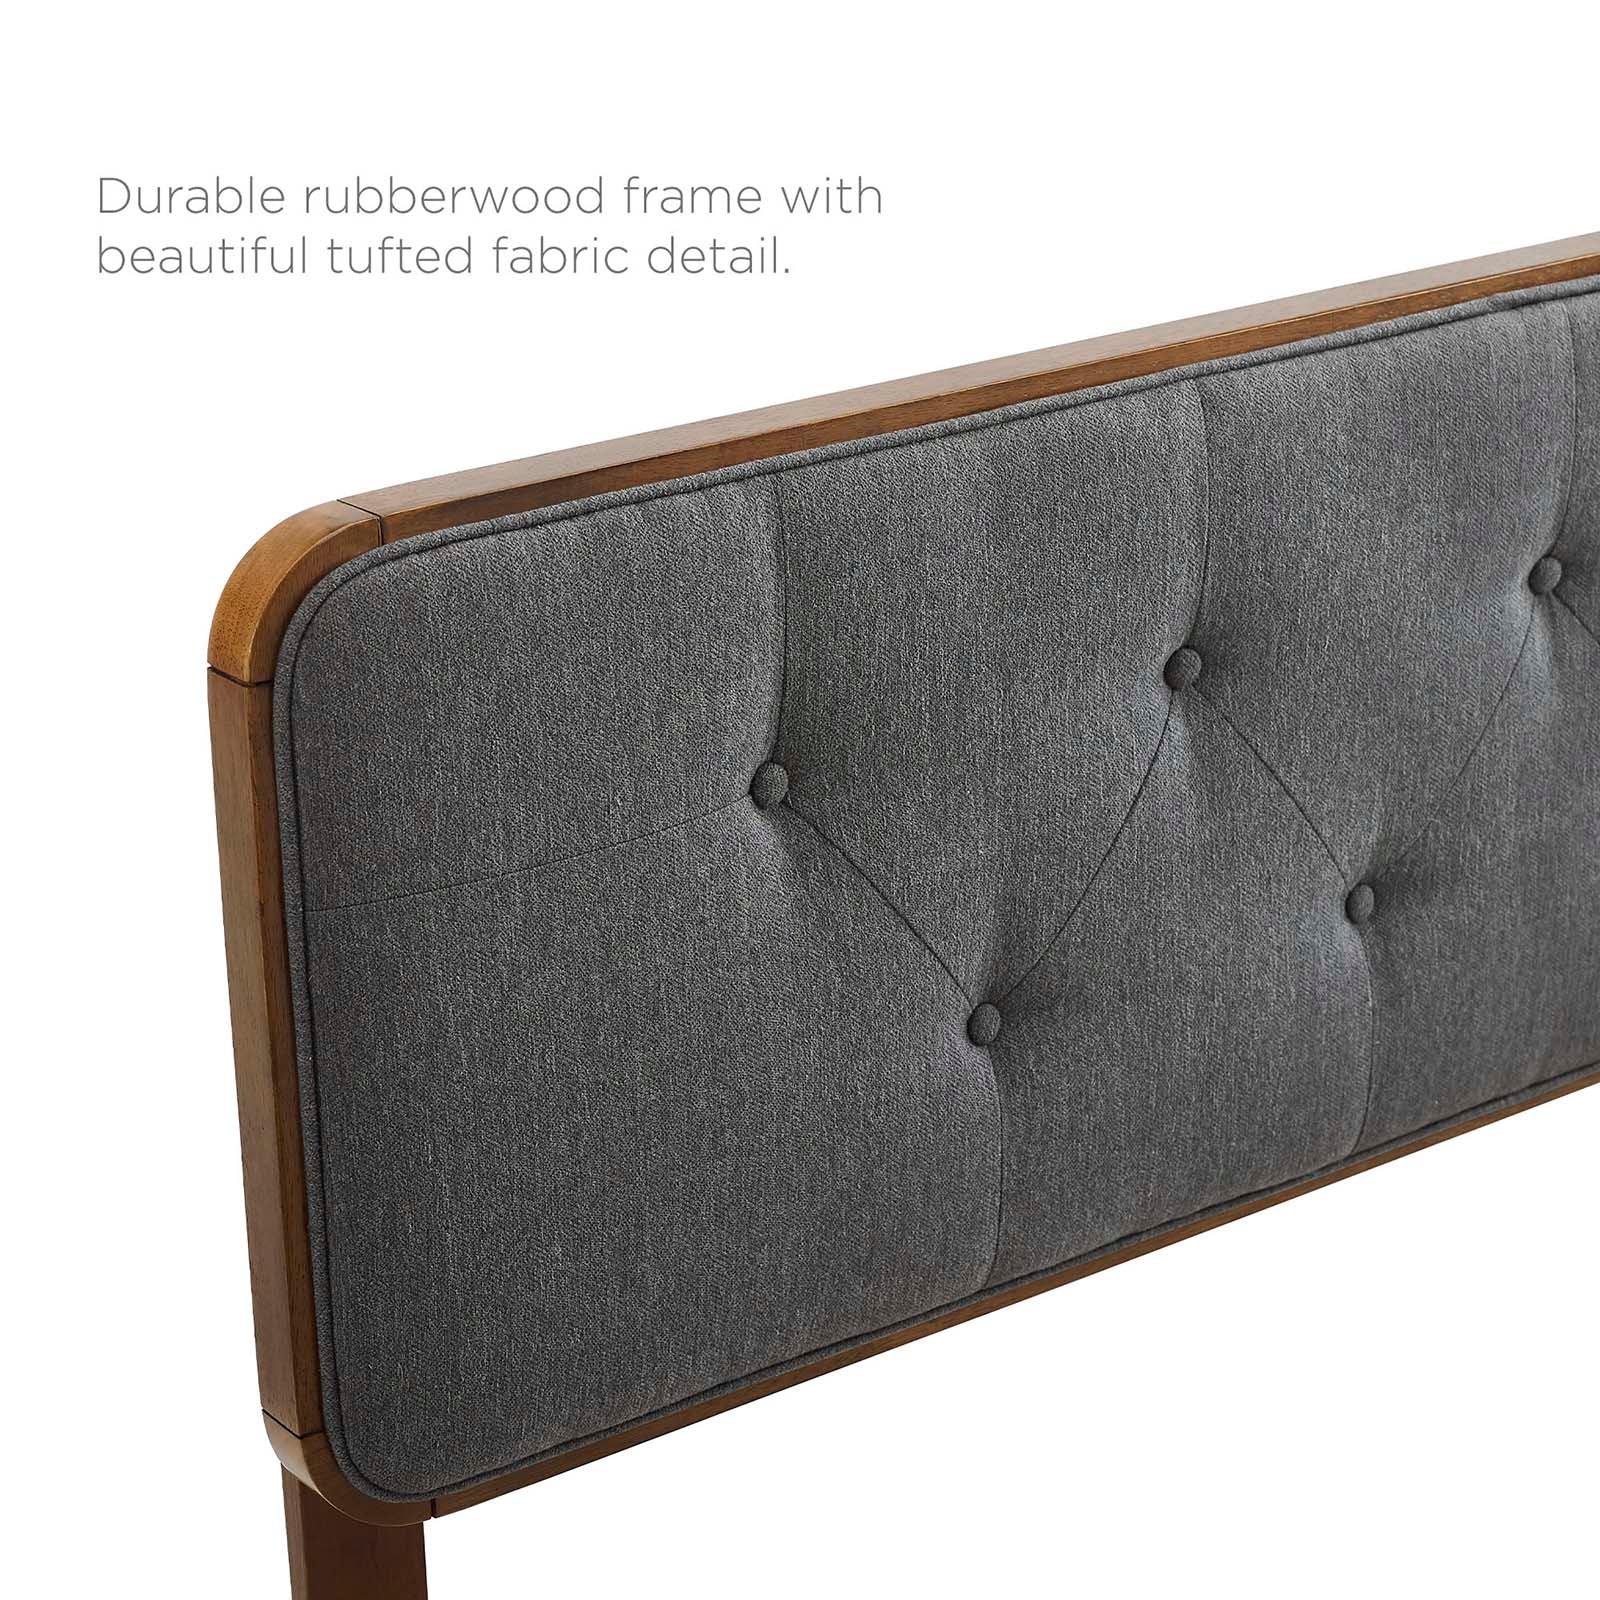 Bridgette King Wood Platform Bed With Angular Frame - East Shore Modern Home Furnishings